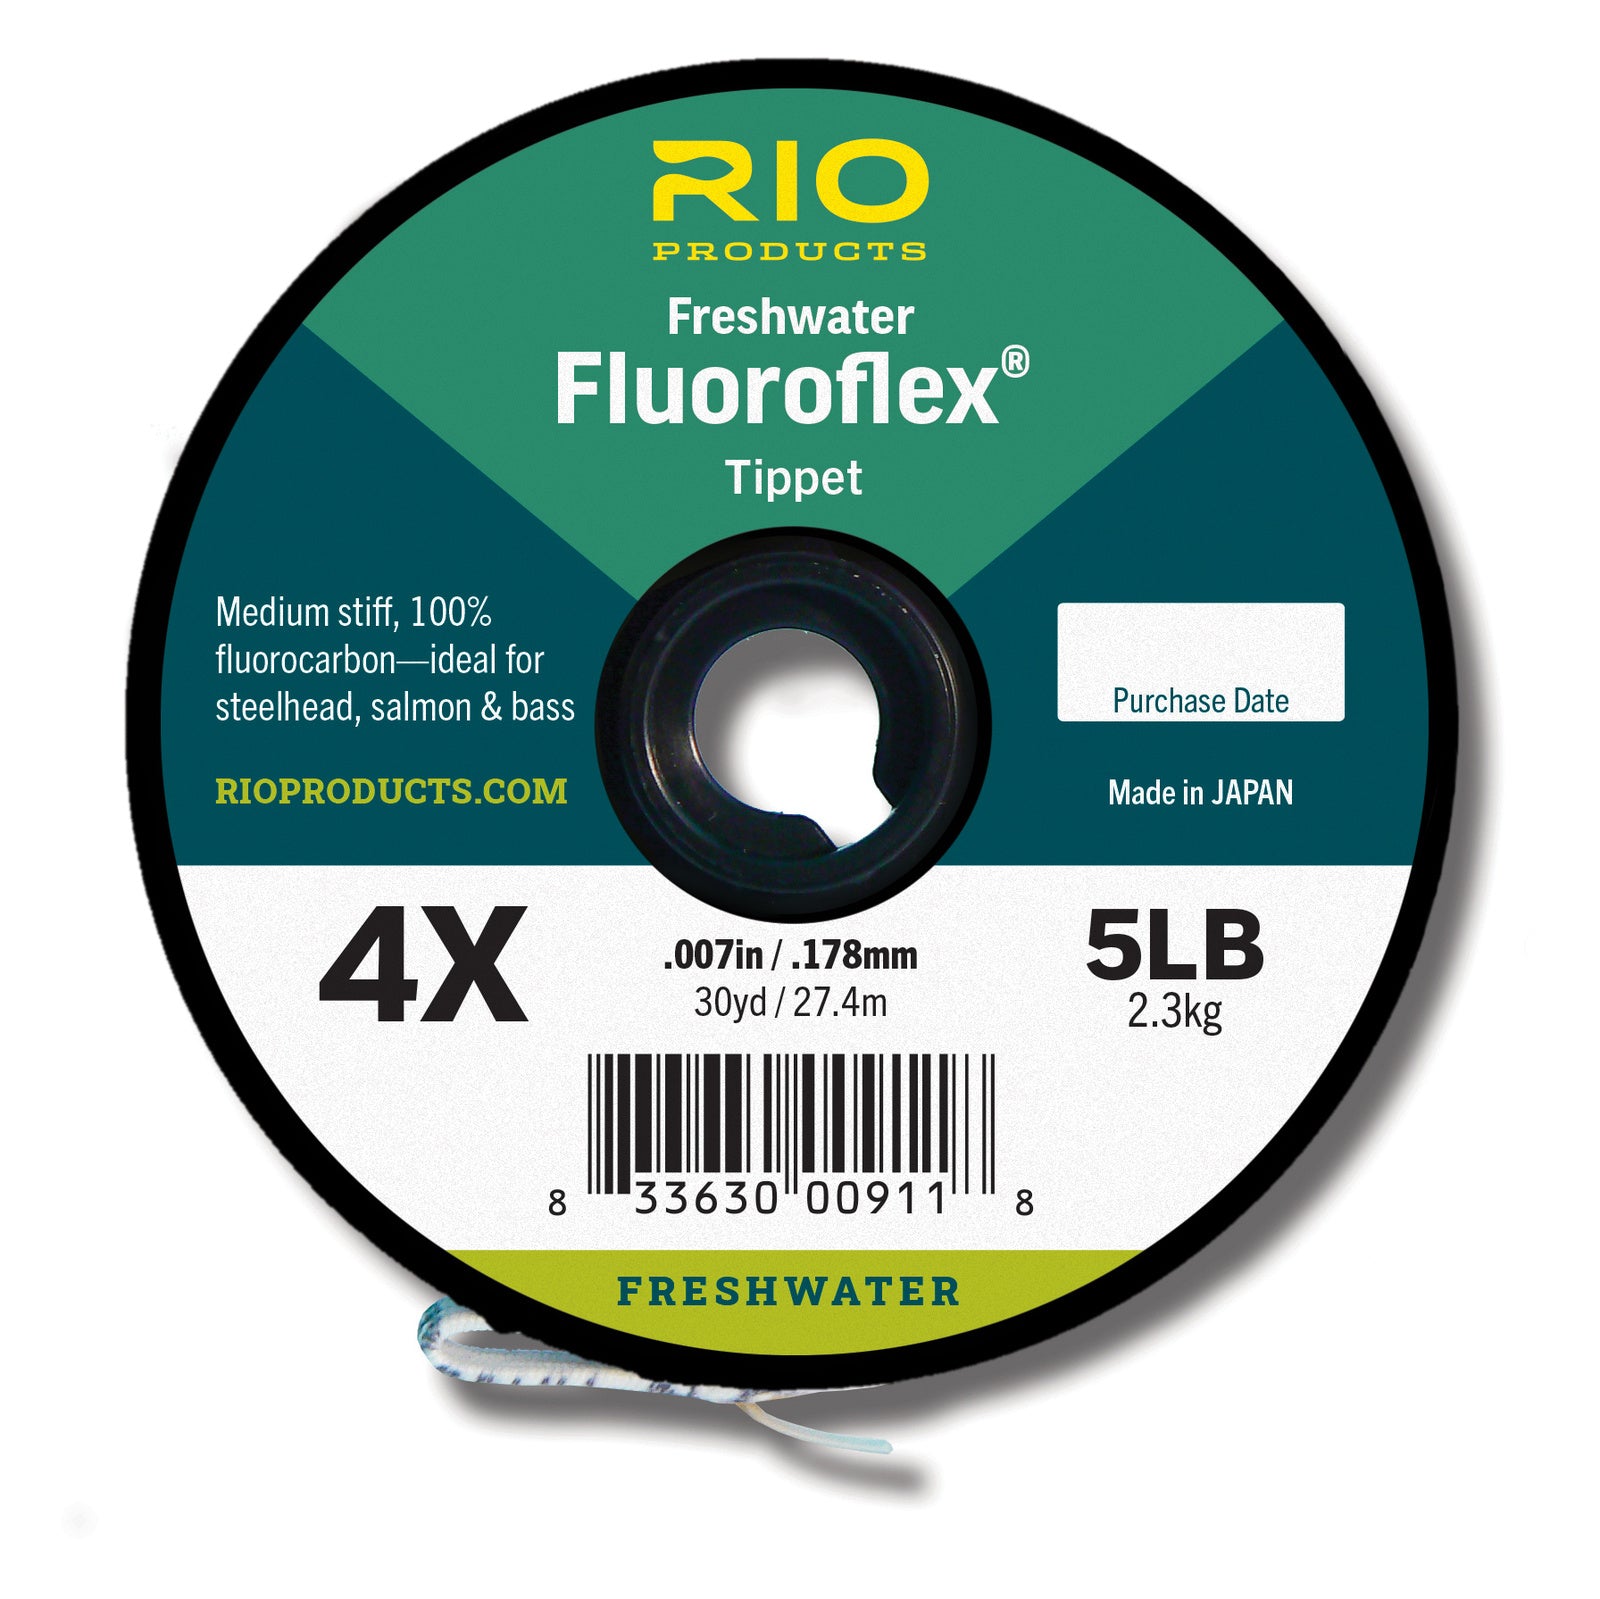 RIO Fluoroflex Freshwater Tippet